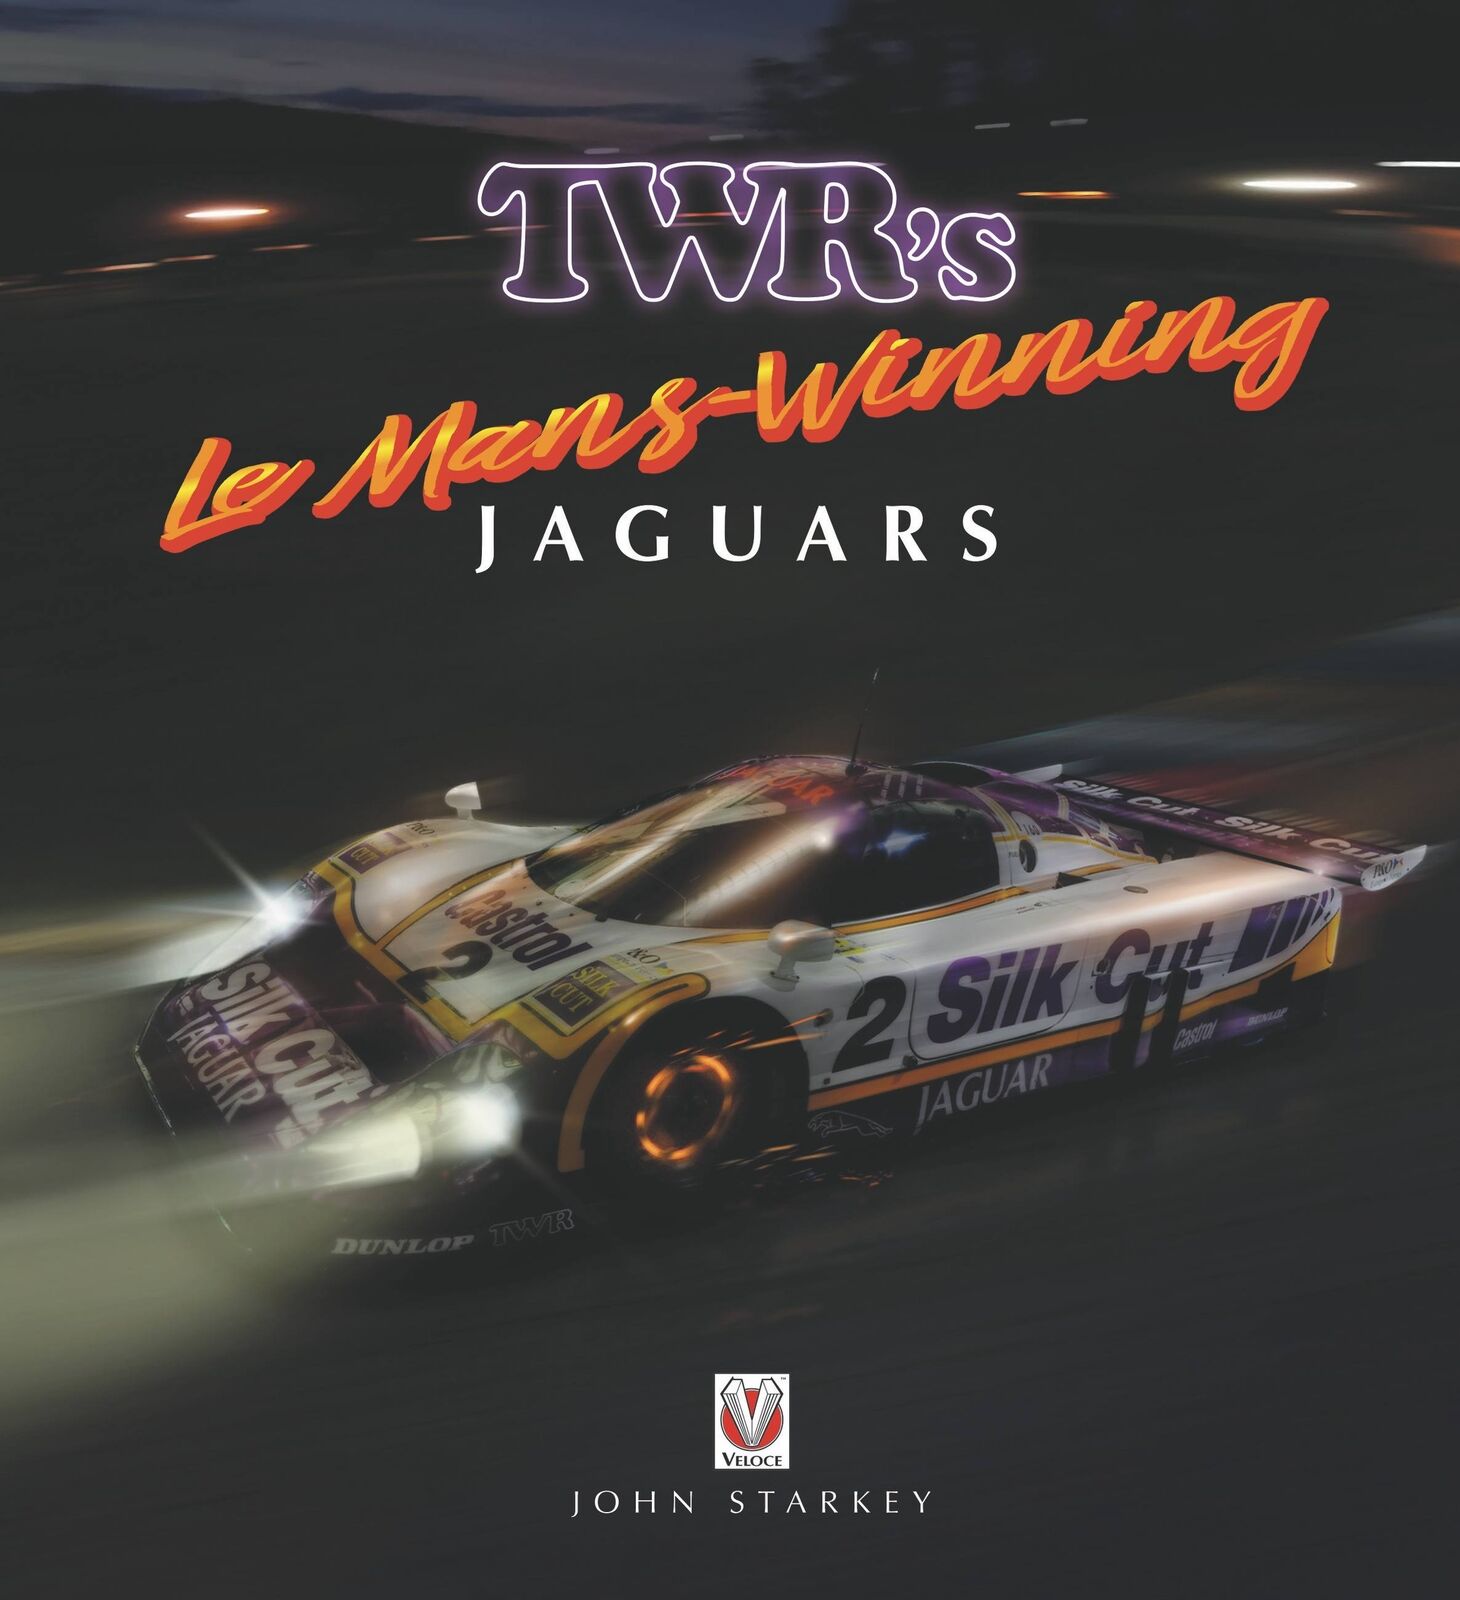 TWR's Le Mans winning Jaguars book